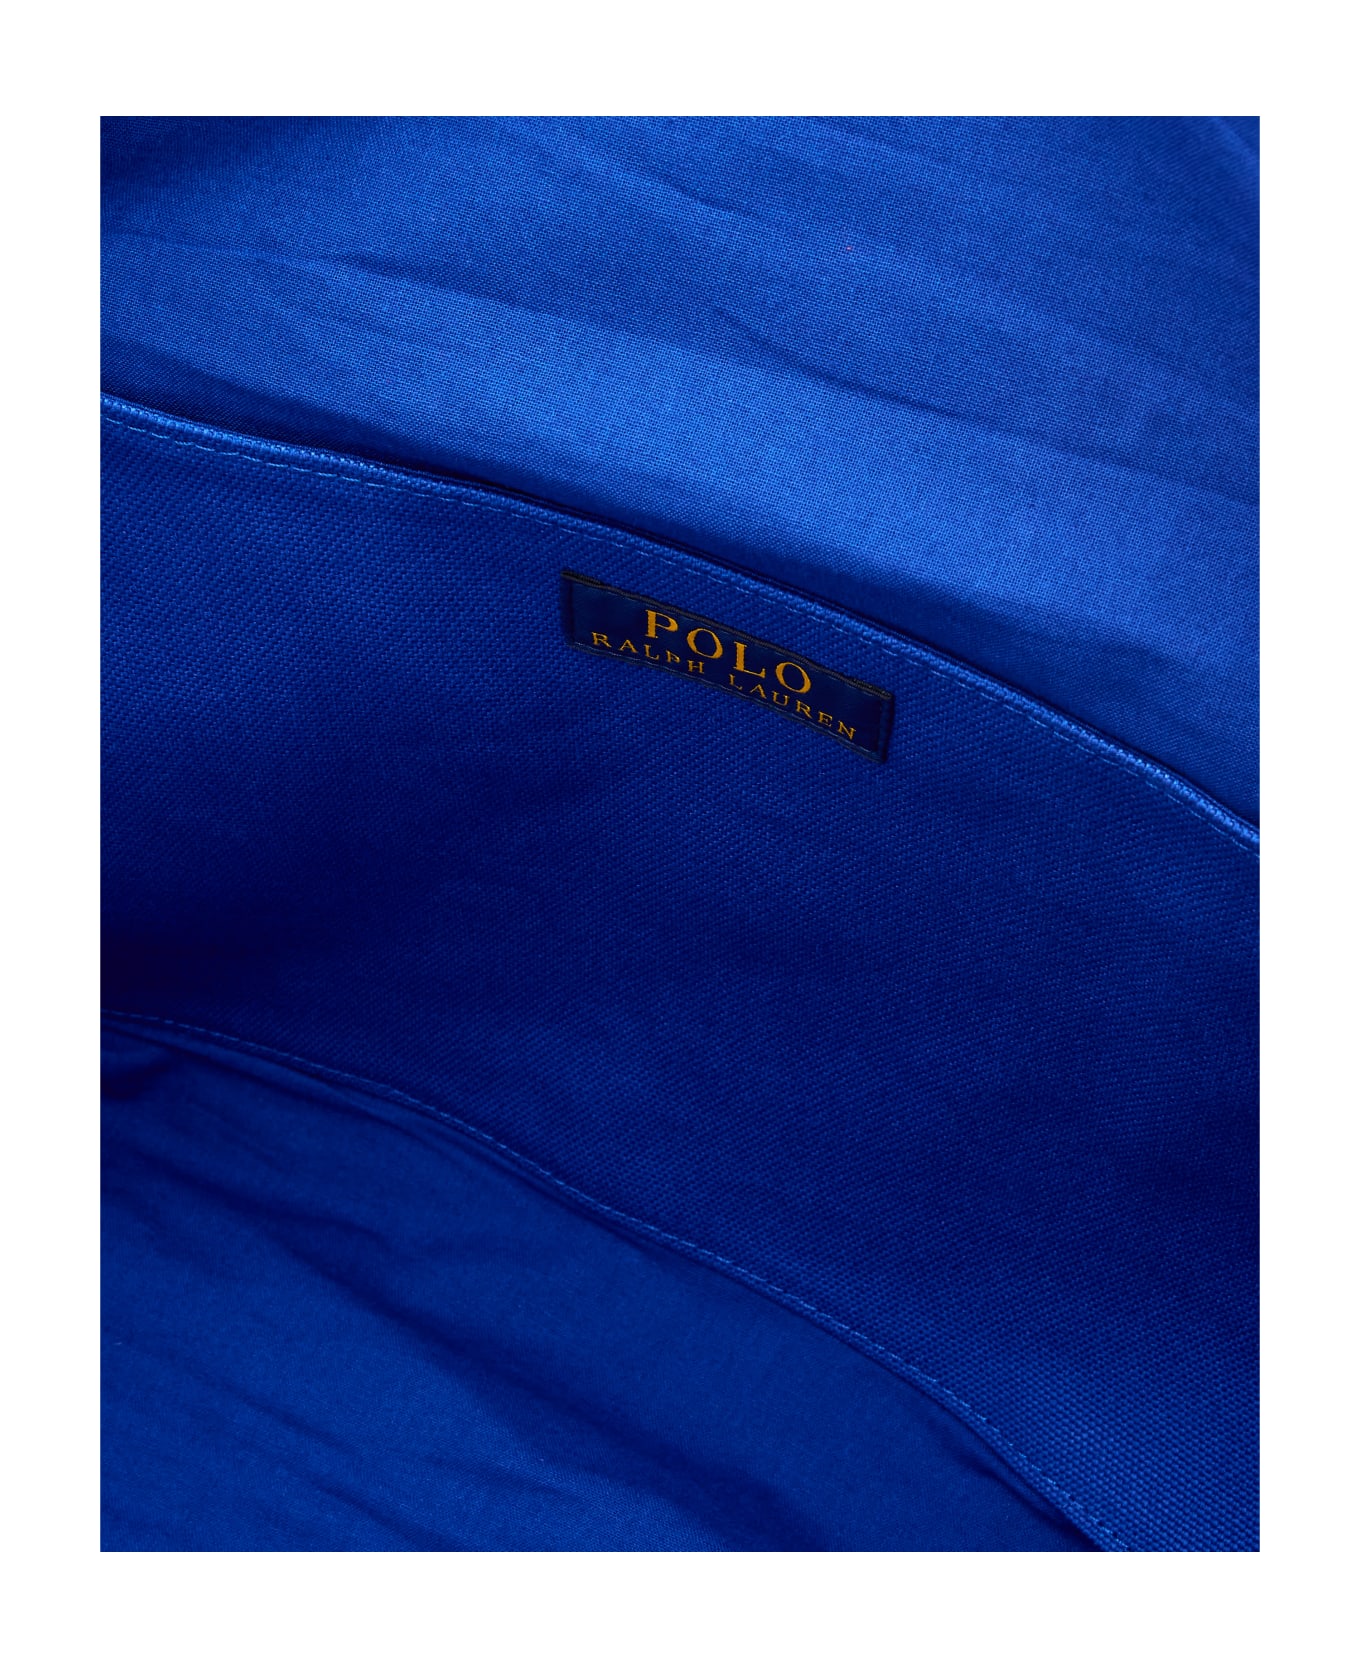 Polo Ralph Lauren Duffle Large Travel Bag - Blue トラベルバッグ